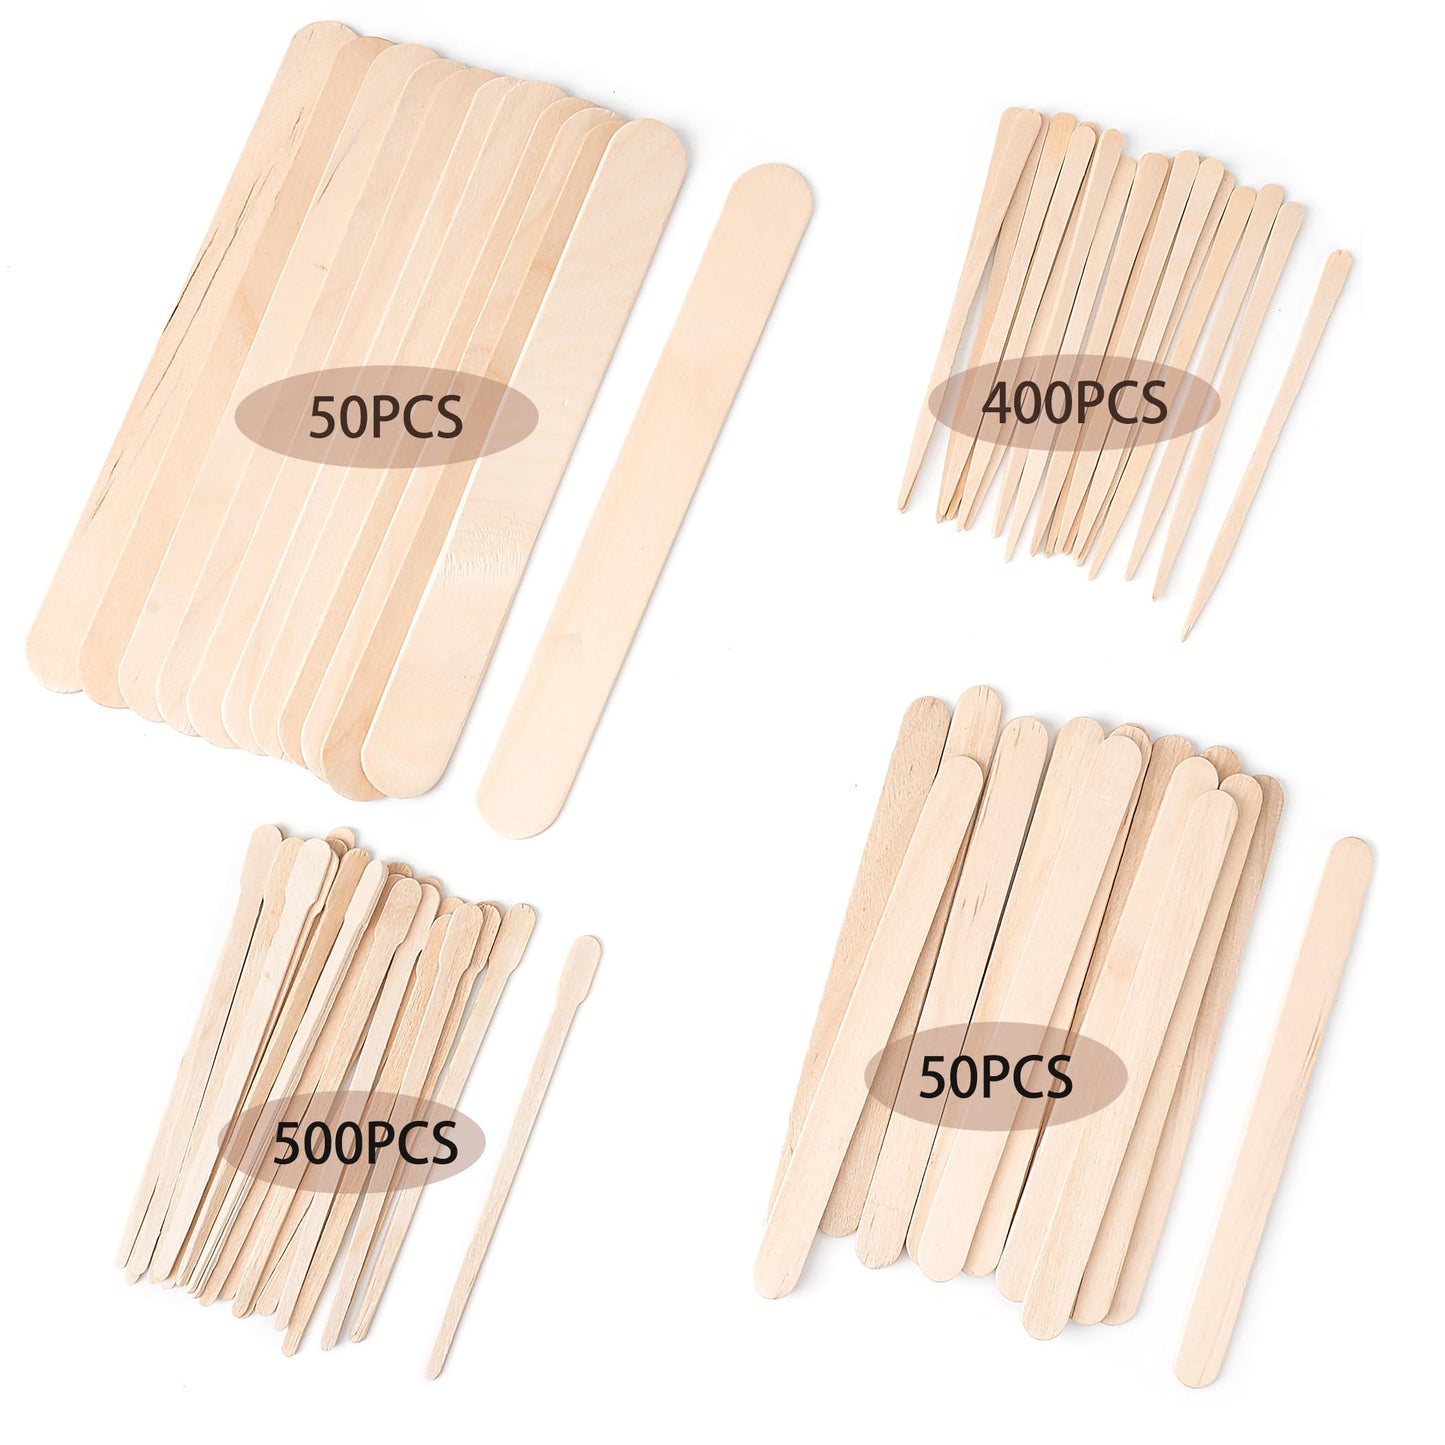 1000Pcs Waxing Sticks - 4 Style Assorted Wood Wax Sticks for Body Face Hair Removal, Eyebrow Lip Nose Small Waxing Applicator Sticks, Wax Spatula Applicator Wooden Craft Sticks